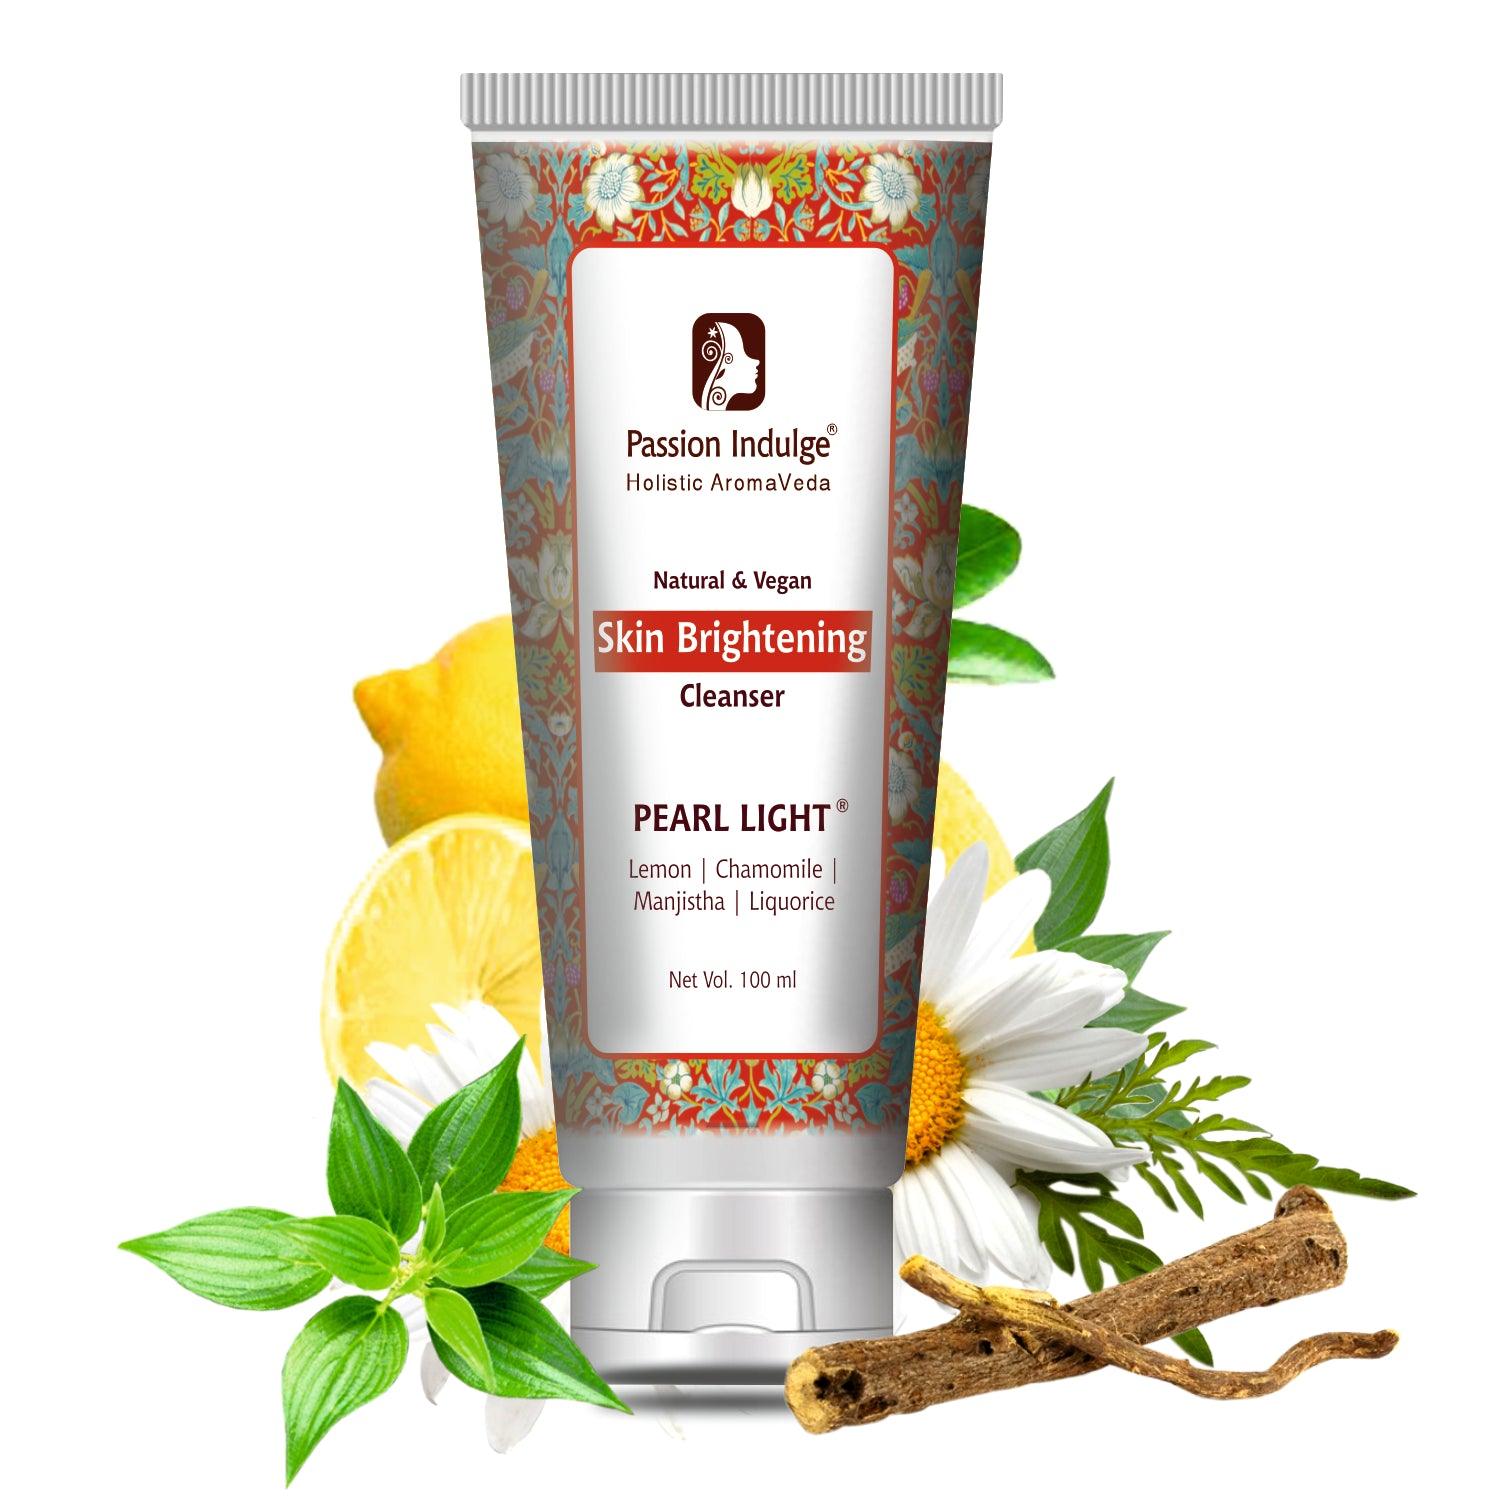 Pearl Light Cleanser 100ml For Dark Spots Reduction | Skin Brightening & Lightening | Glowing Skin | Natural & Vegan | Ayurvedic - passionindulge